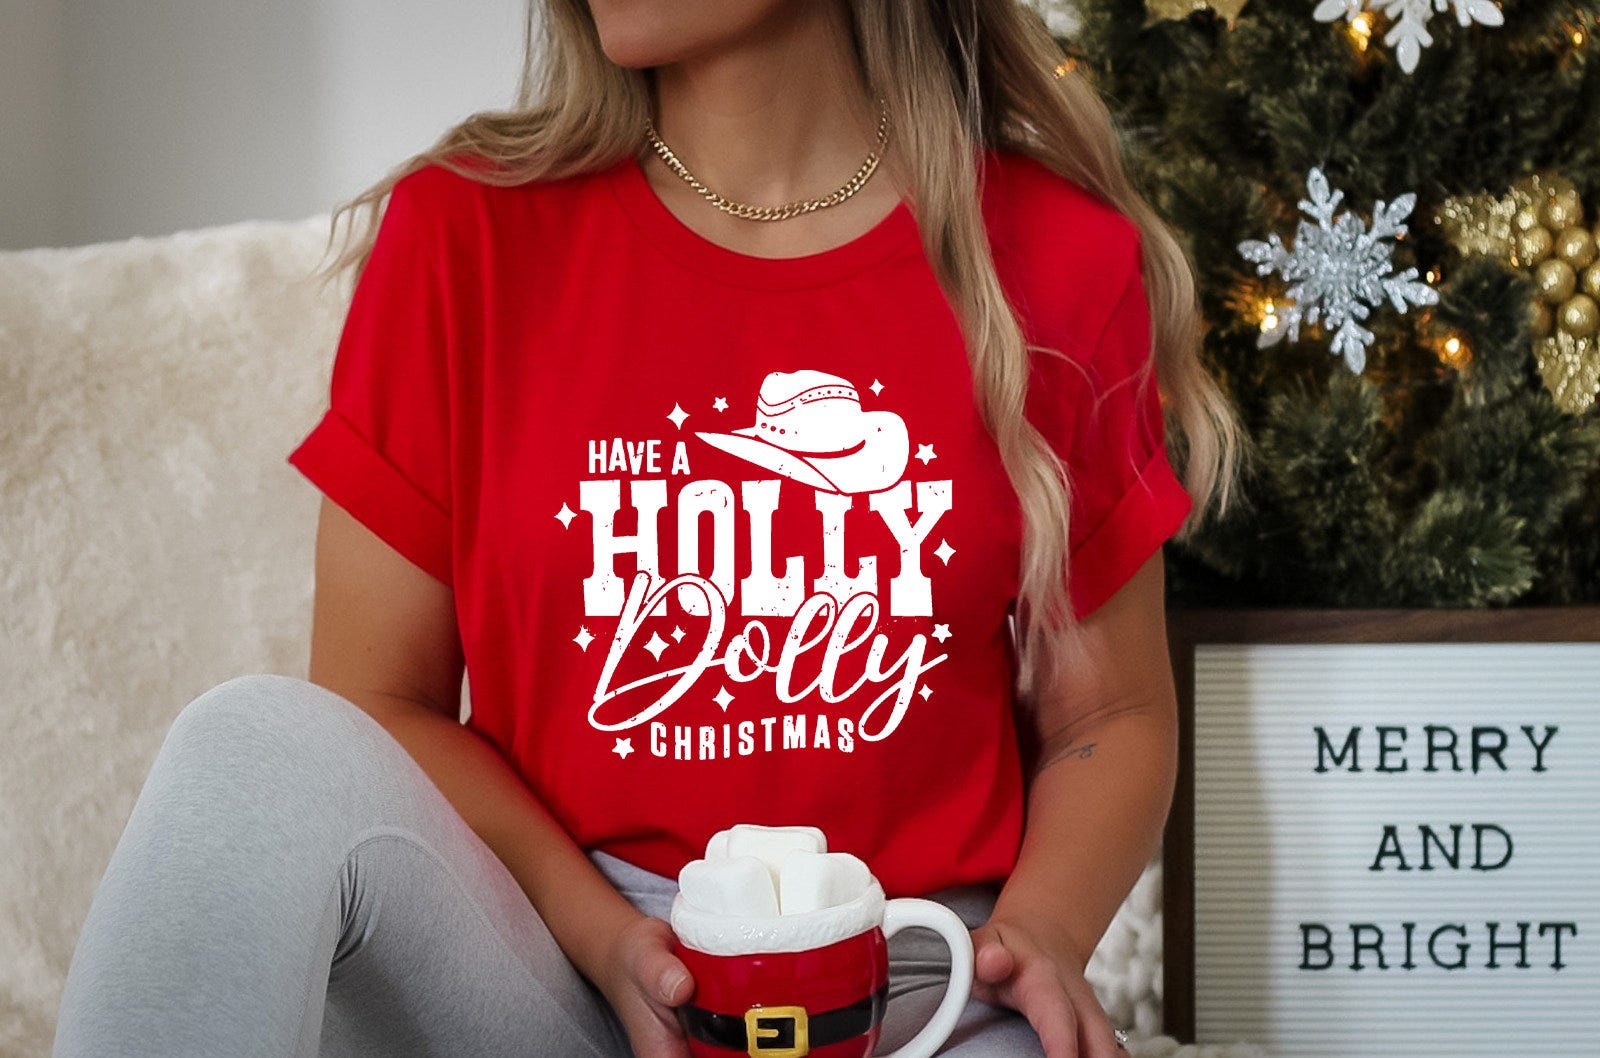 Holly Christmas Shirt, Cowboy Christmas Shirt, Western Shirt, Holly Jolly Tee, Retro Christmas Dolly, Parton Shirt, Howdy Santa Shirt